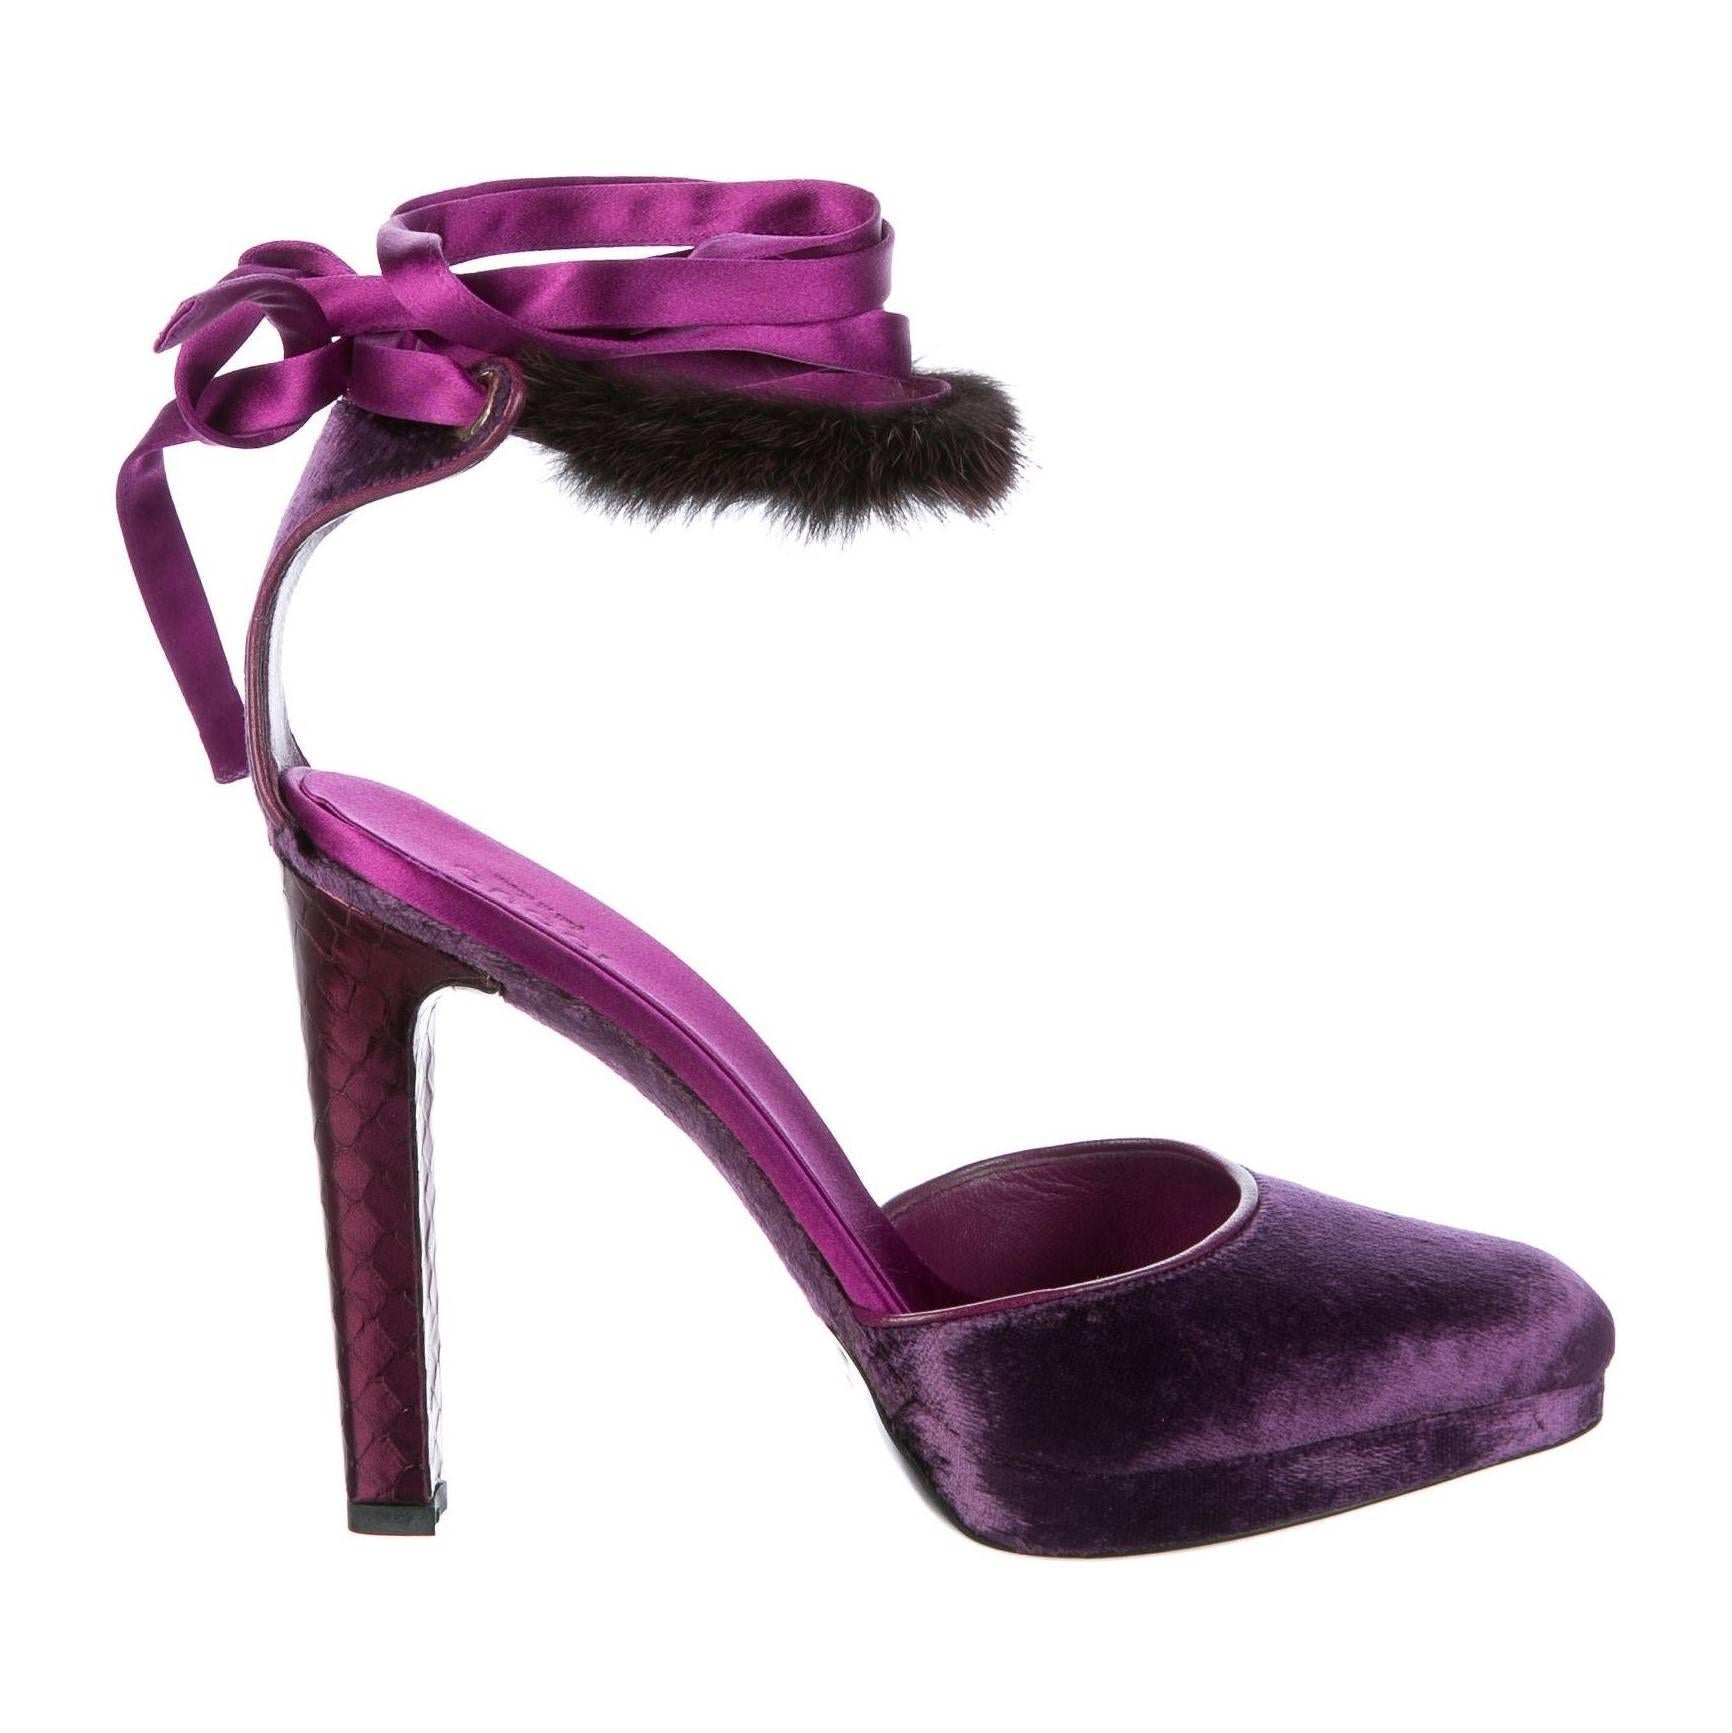 Tom Ford for Gucci Mink Python Heels
Brand New
U.S. Size: 8.5
* Mink, Satin, Python and Velvet heels
* Tom Ford's 